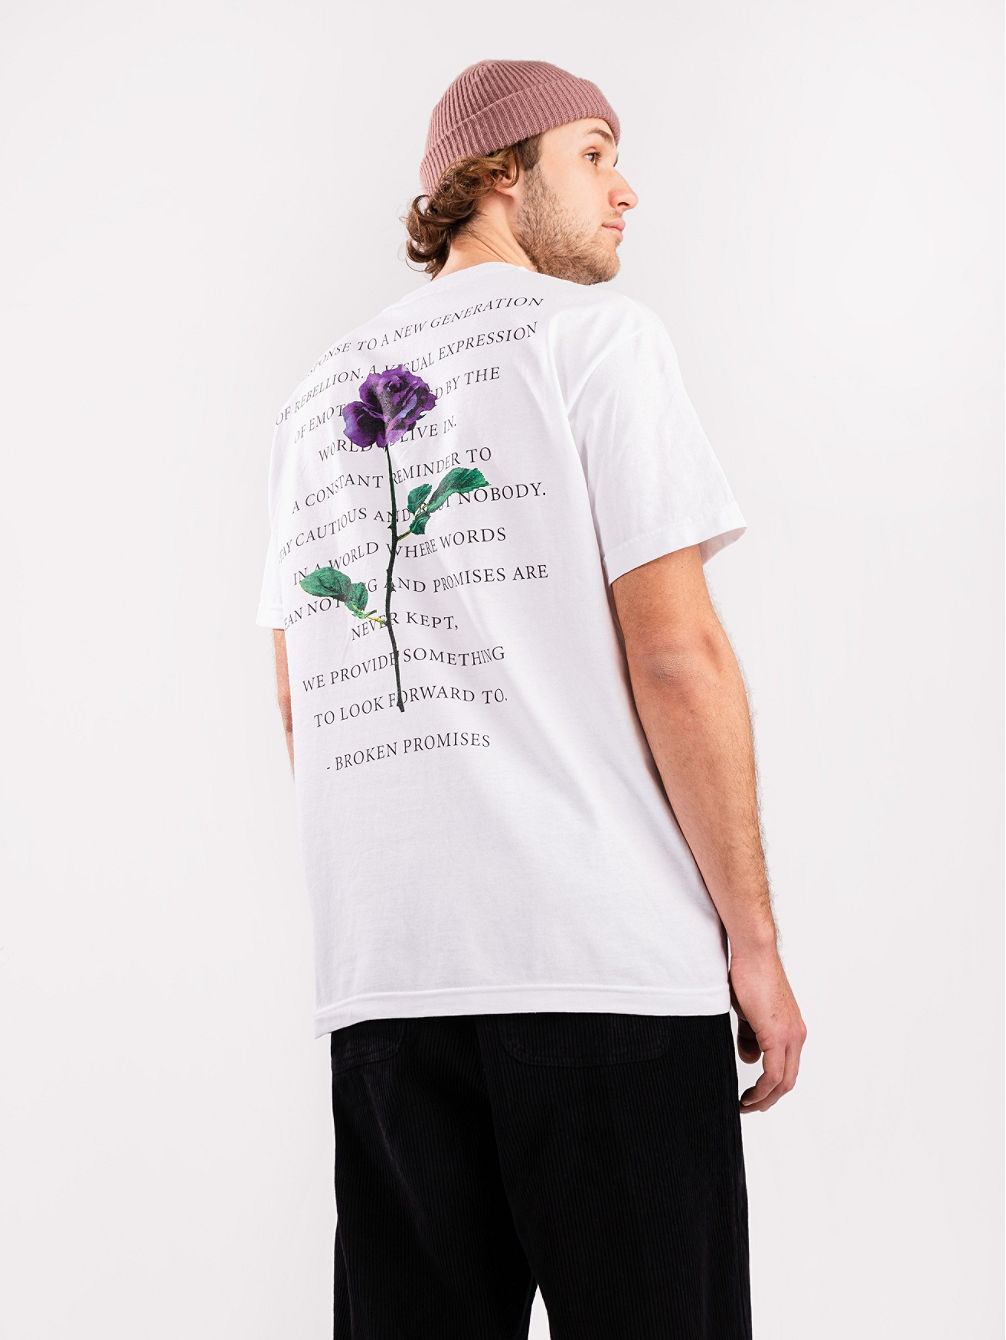 Blossom T-Shirt